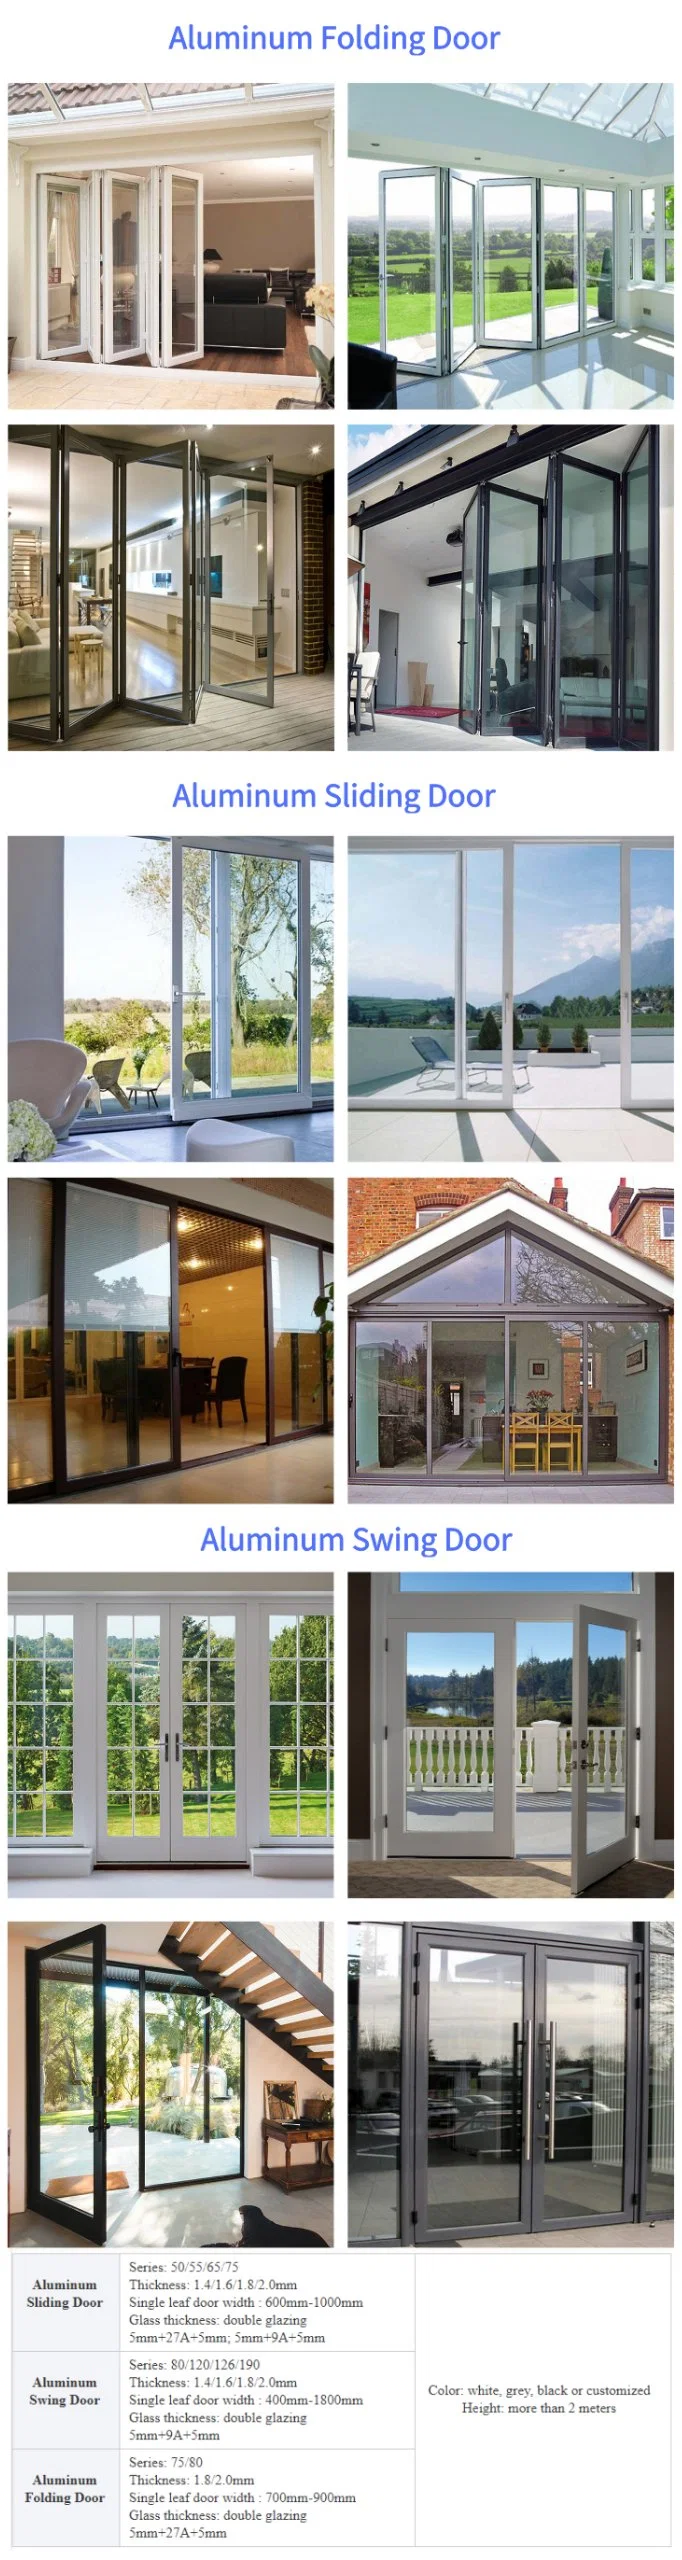 Primacommercial Front Door Aluminumaluminum Hung Windowaluminum Awning Hung Window